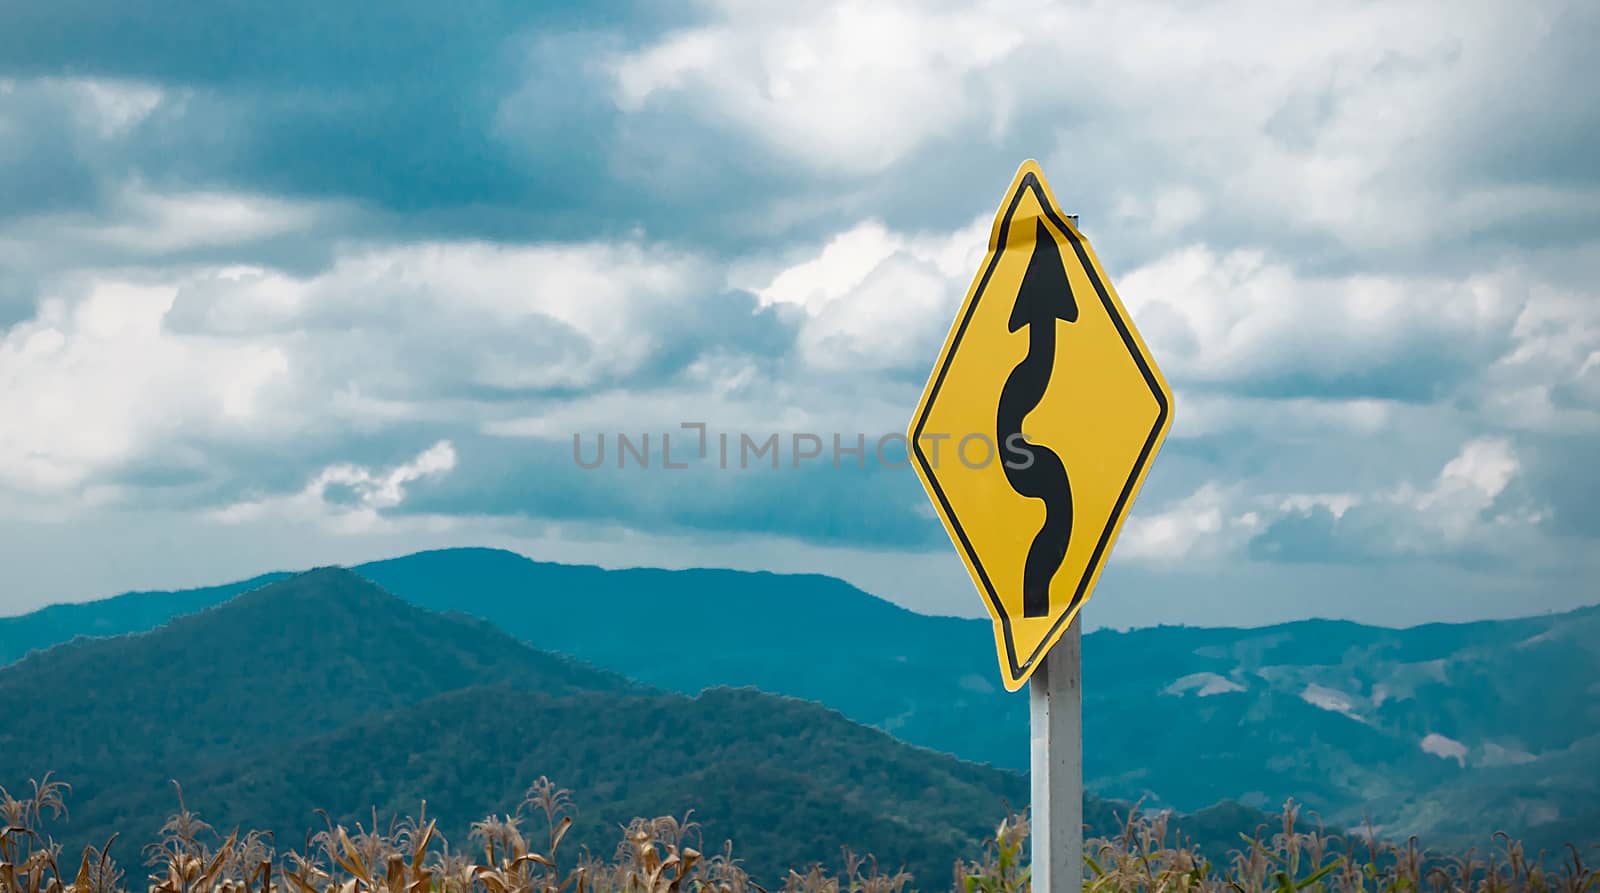 The Curve Traffic Sign Blur Landscape Background.